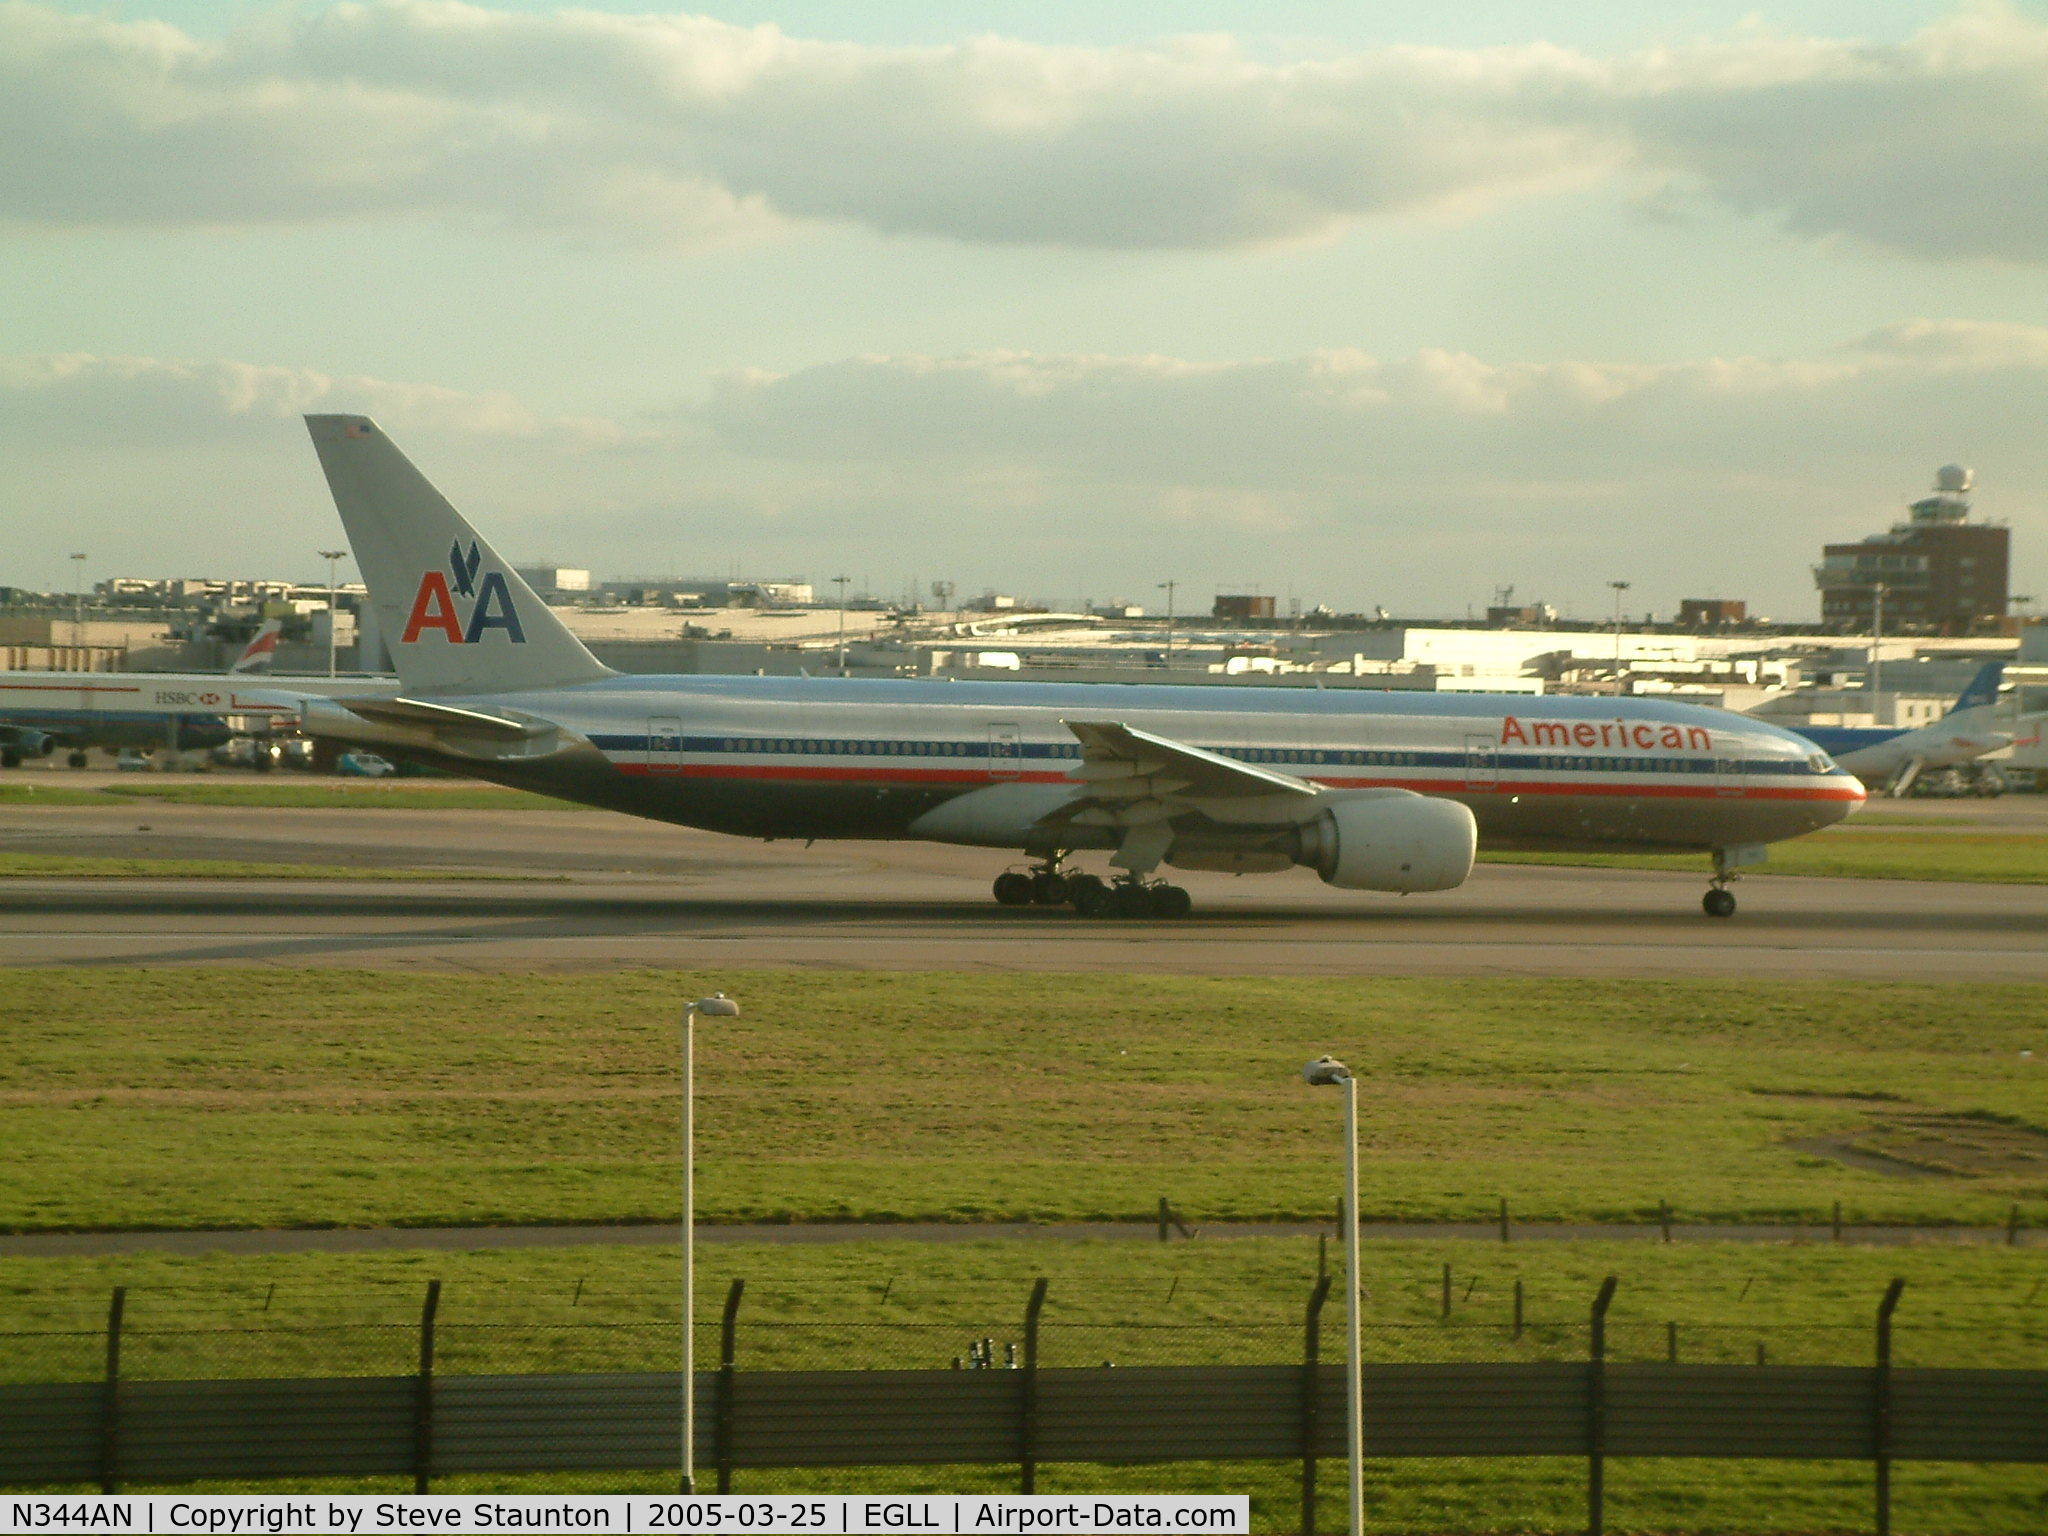 N344AN, 2003 Boeing 767-323 C/N 33083, Taken at Heathrow Airport March 2005